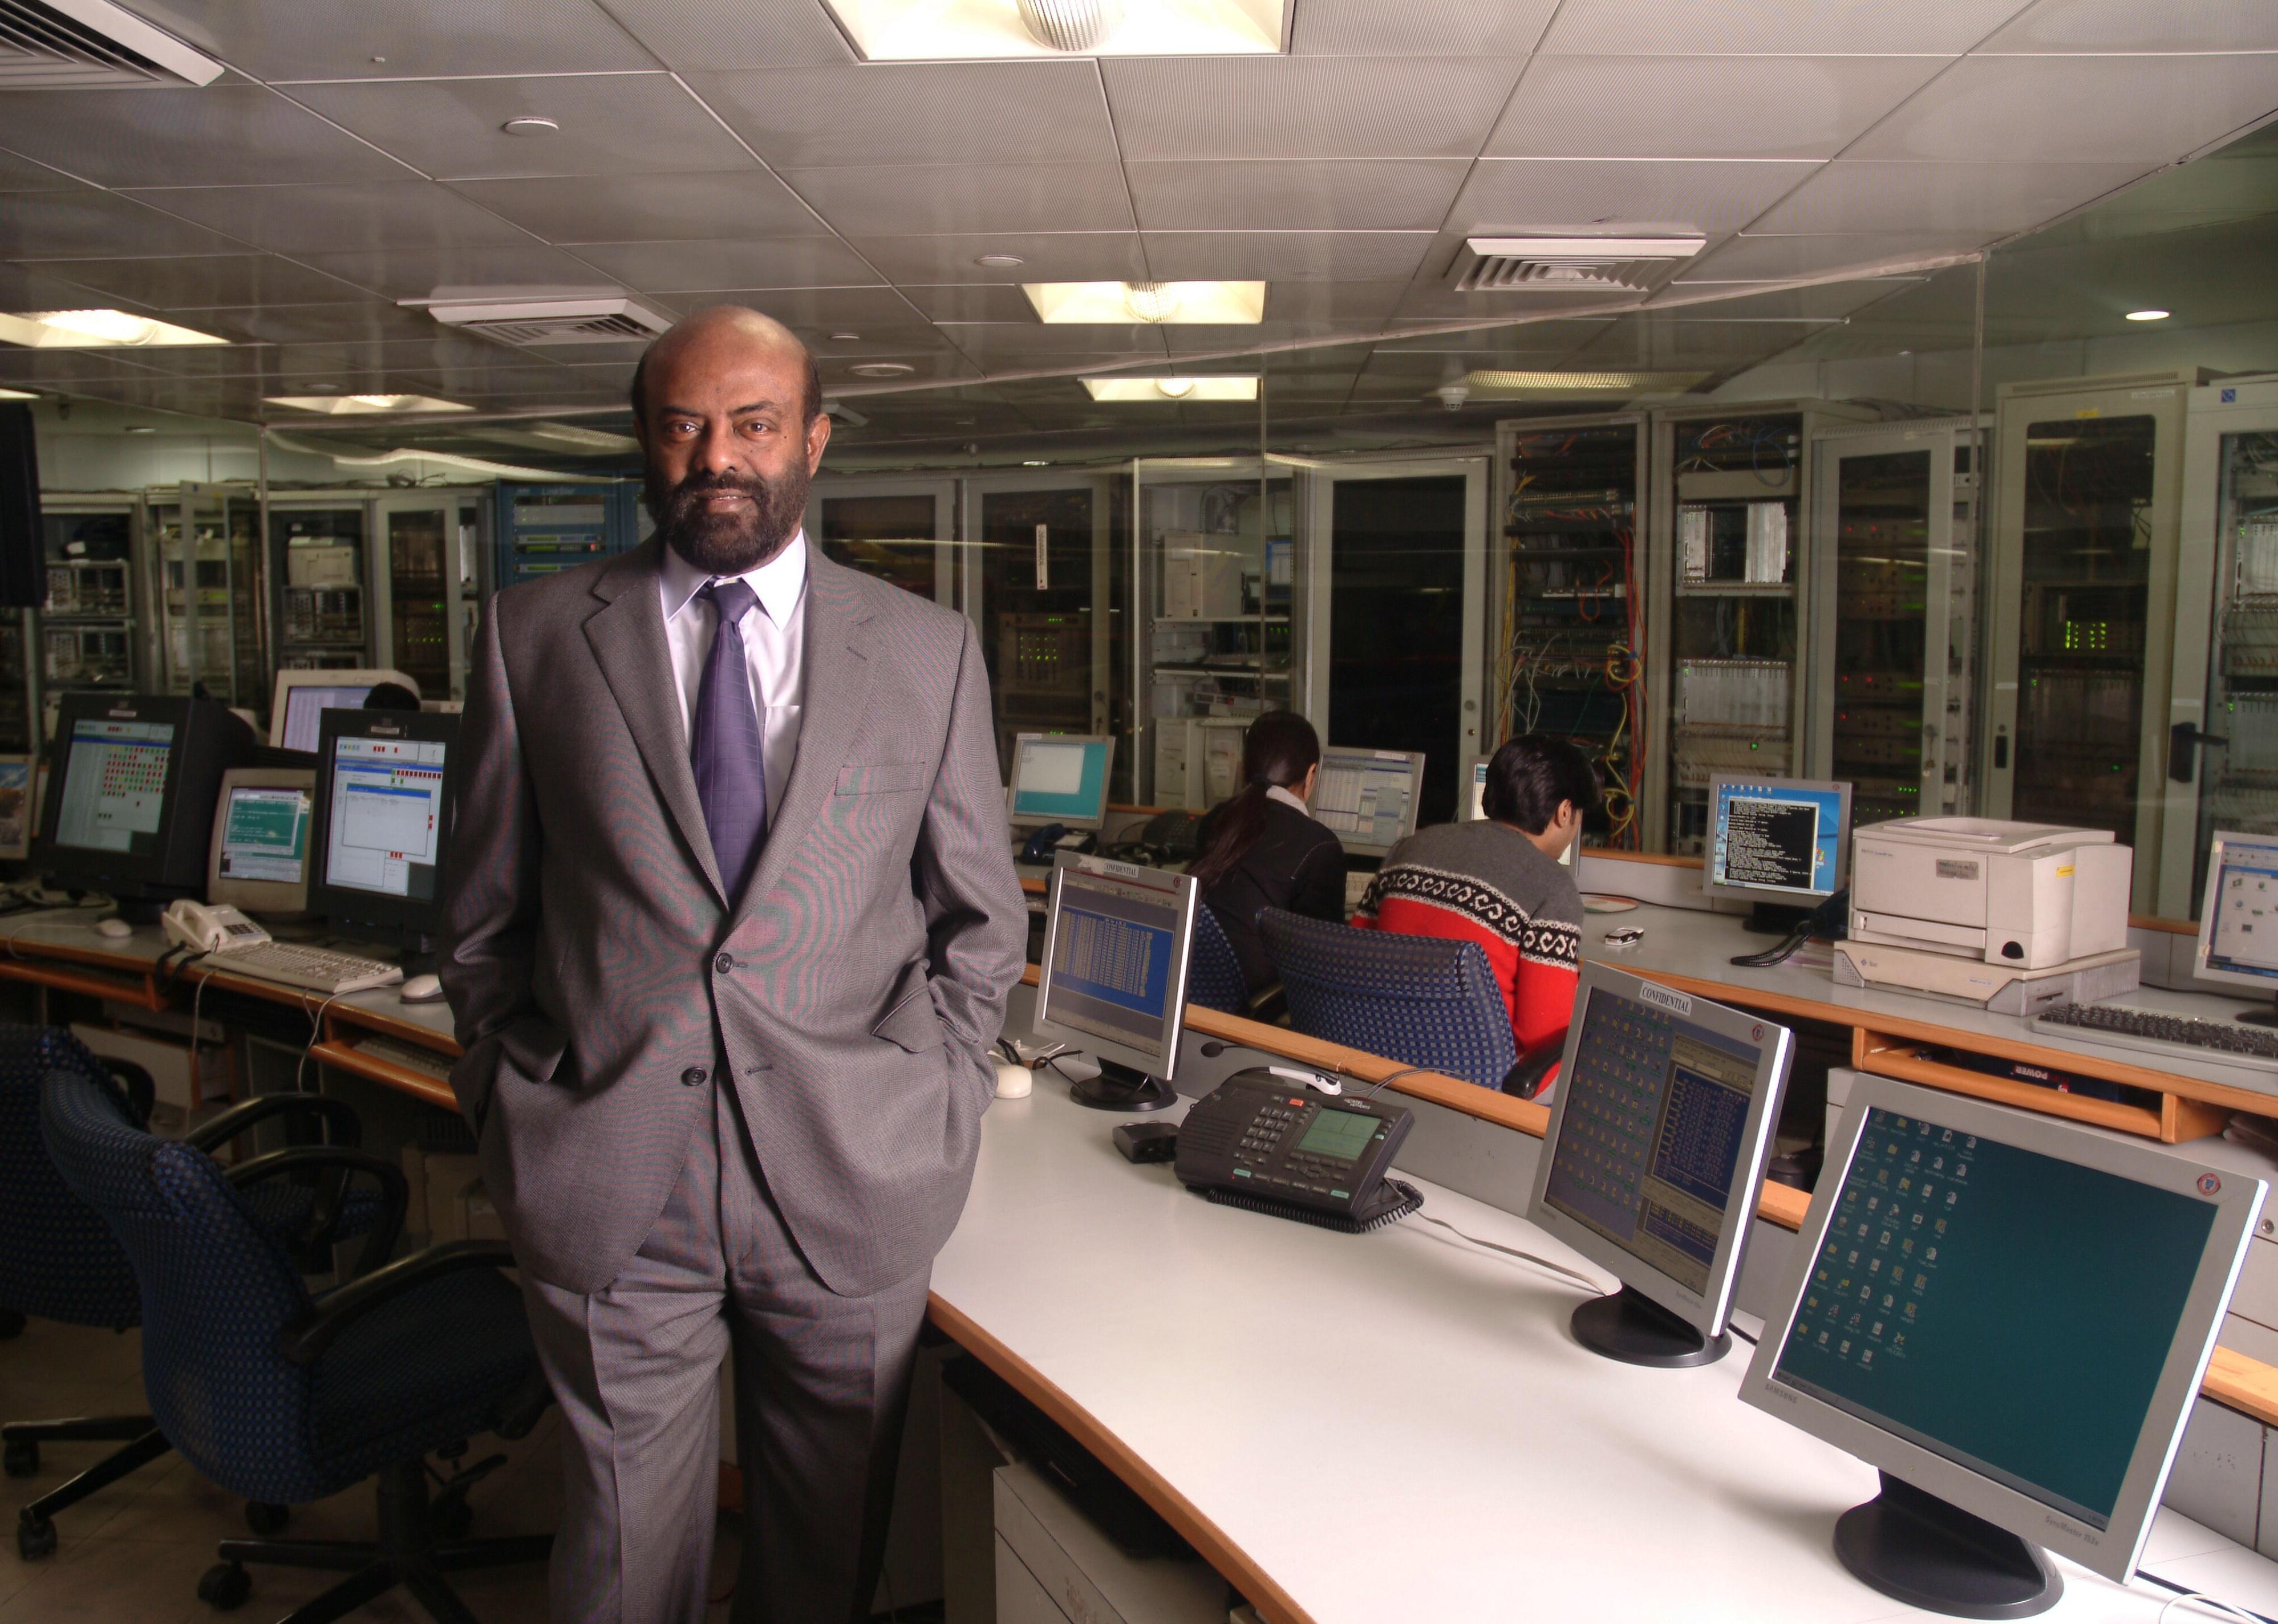 Shiv Nadar in an office.